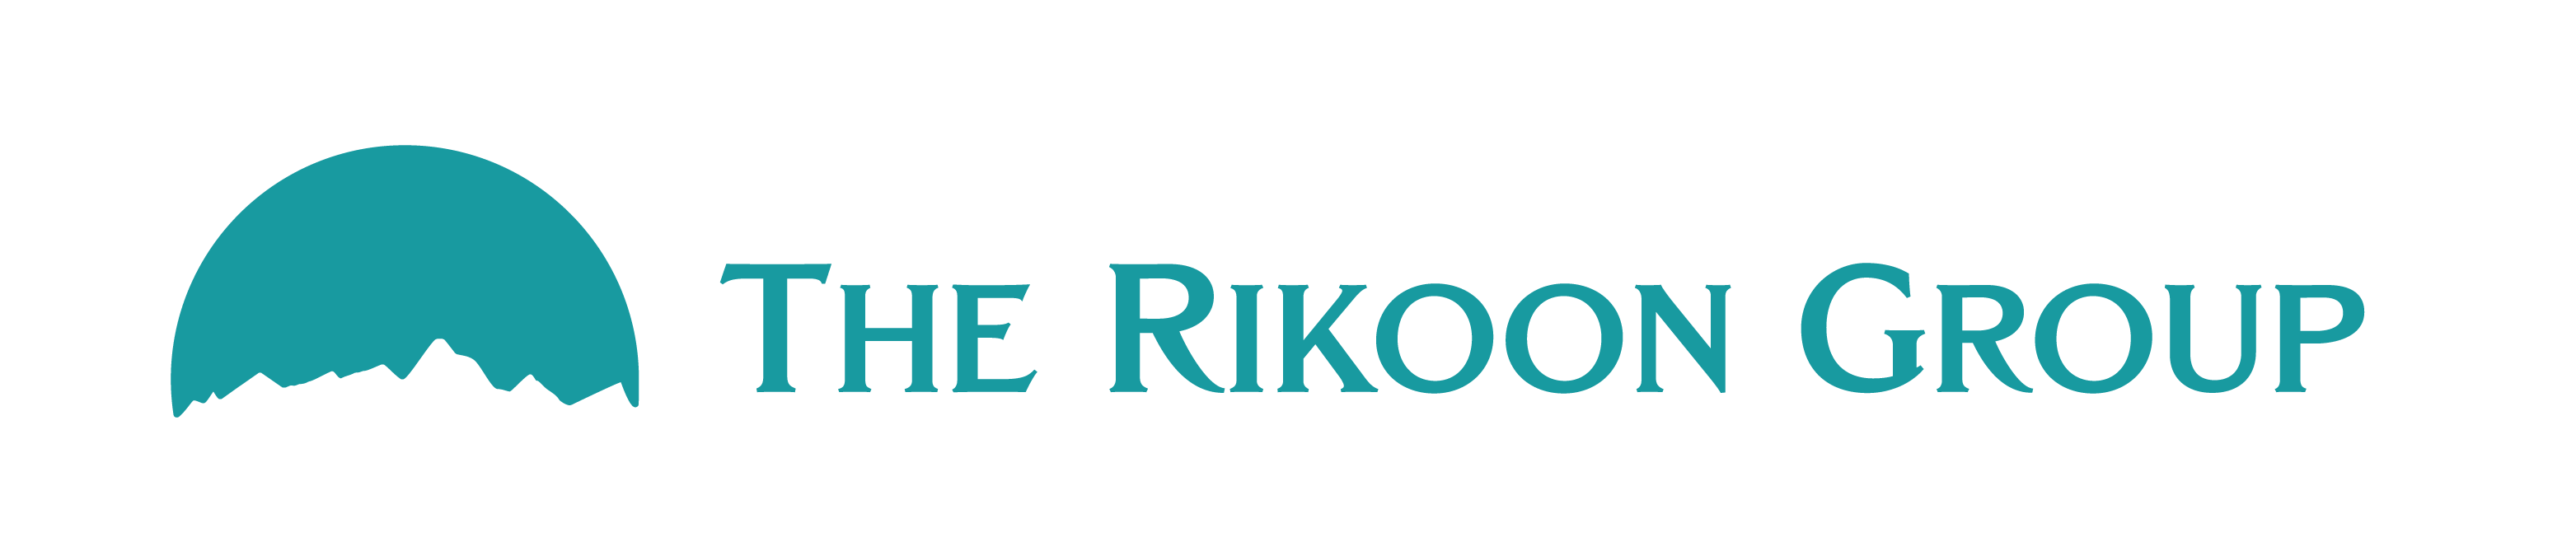 The Rikoon Group Logo